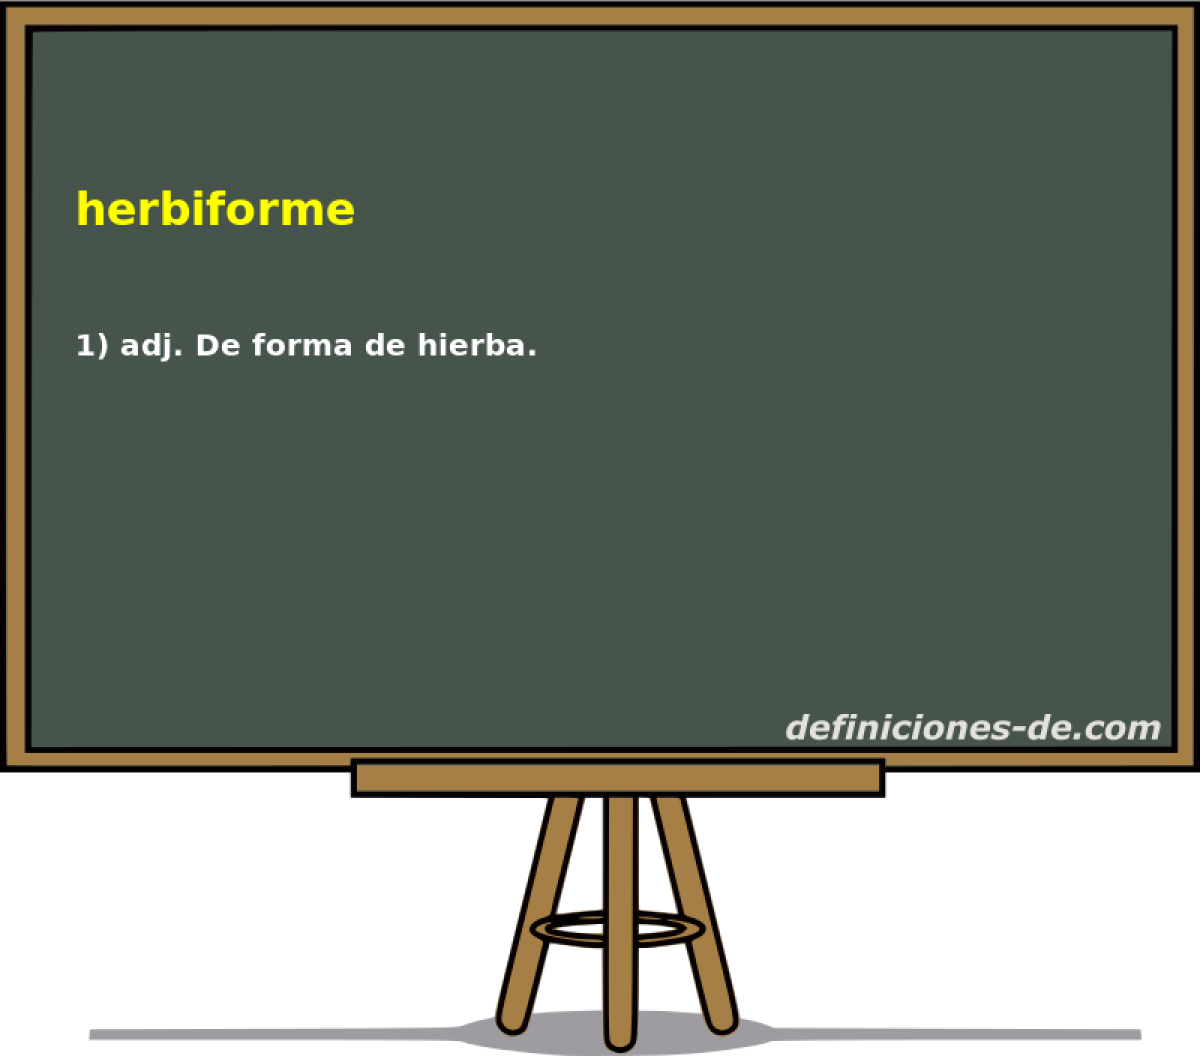 herbiforme 